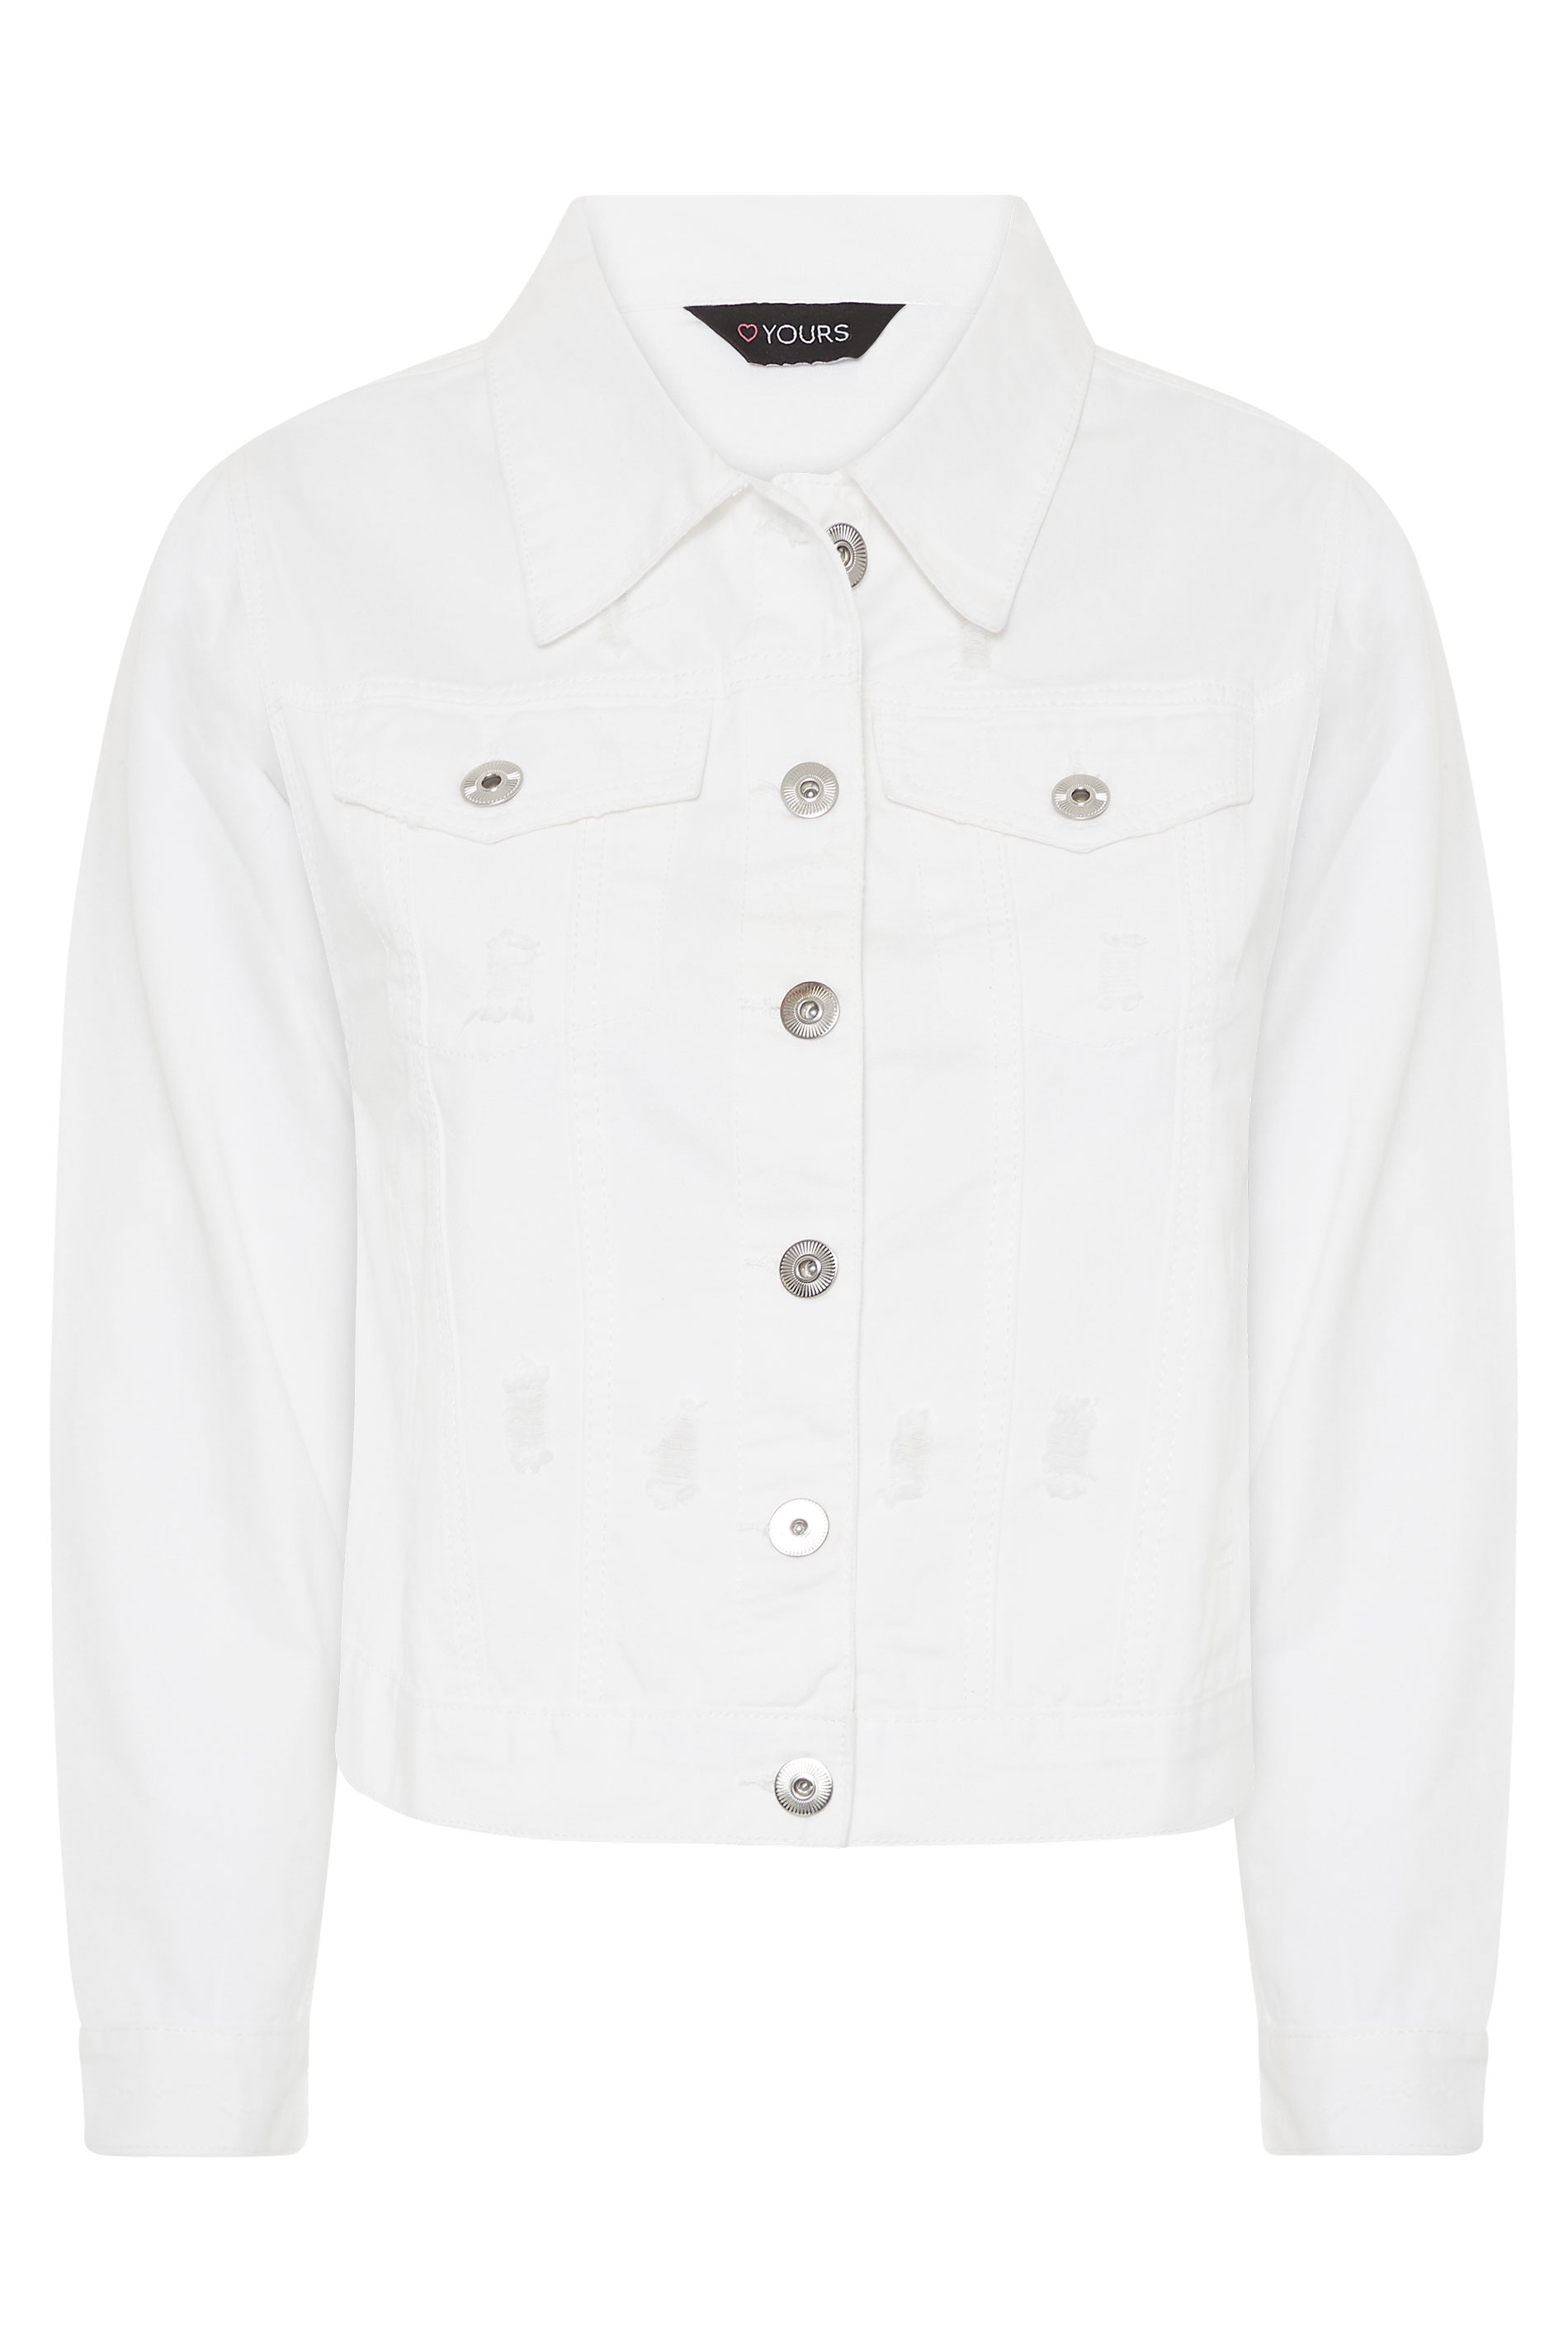 White Distressed Denim Jacket | Yours Clothing